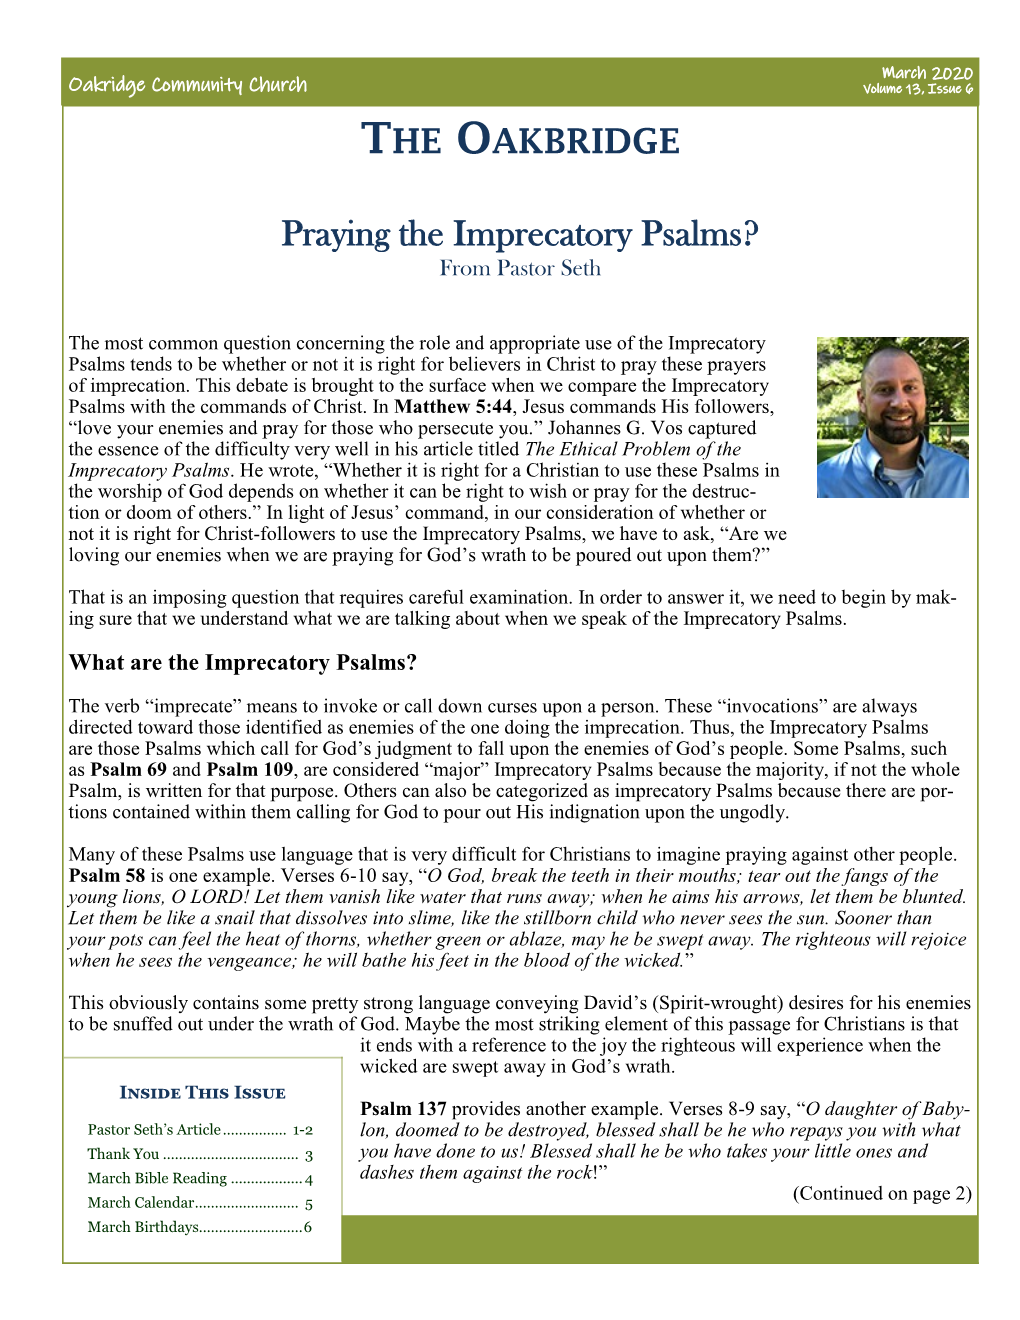 Praying the Imprecatory Psalms? from Pastor Seth